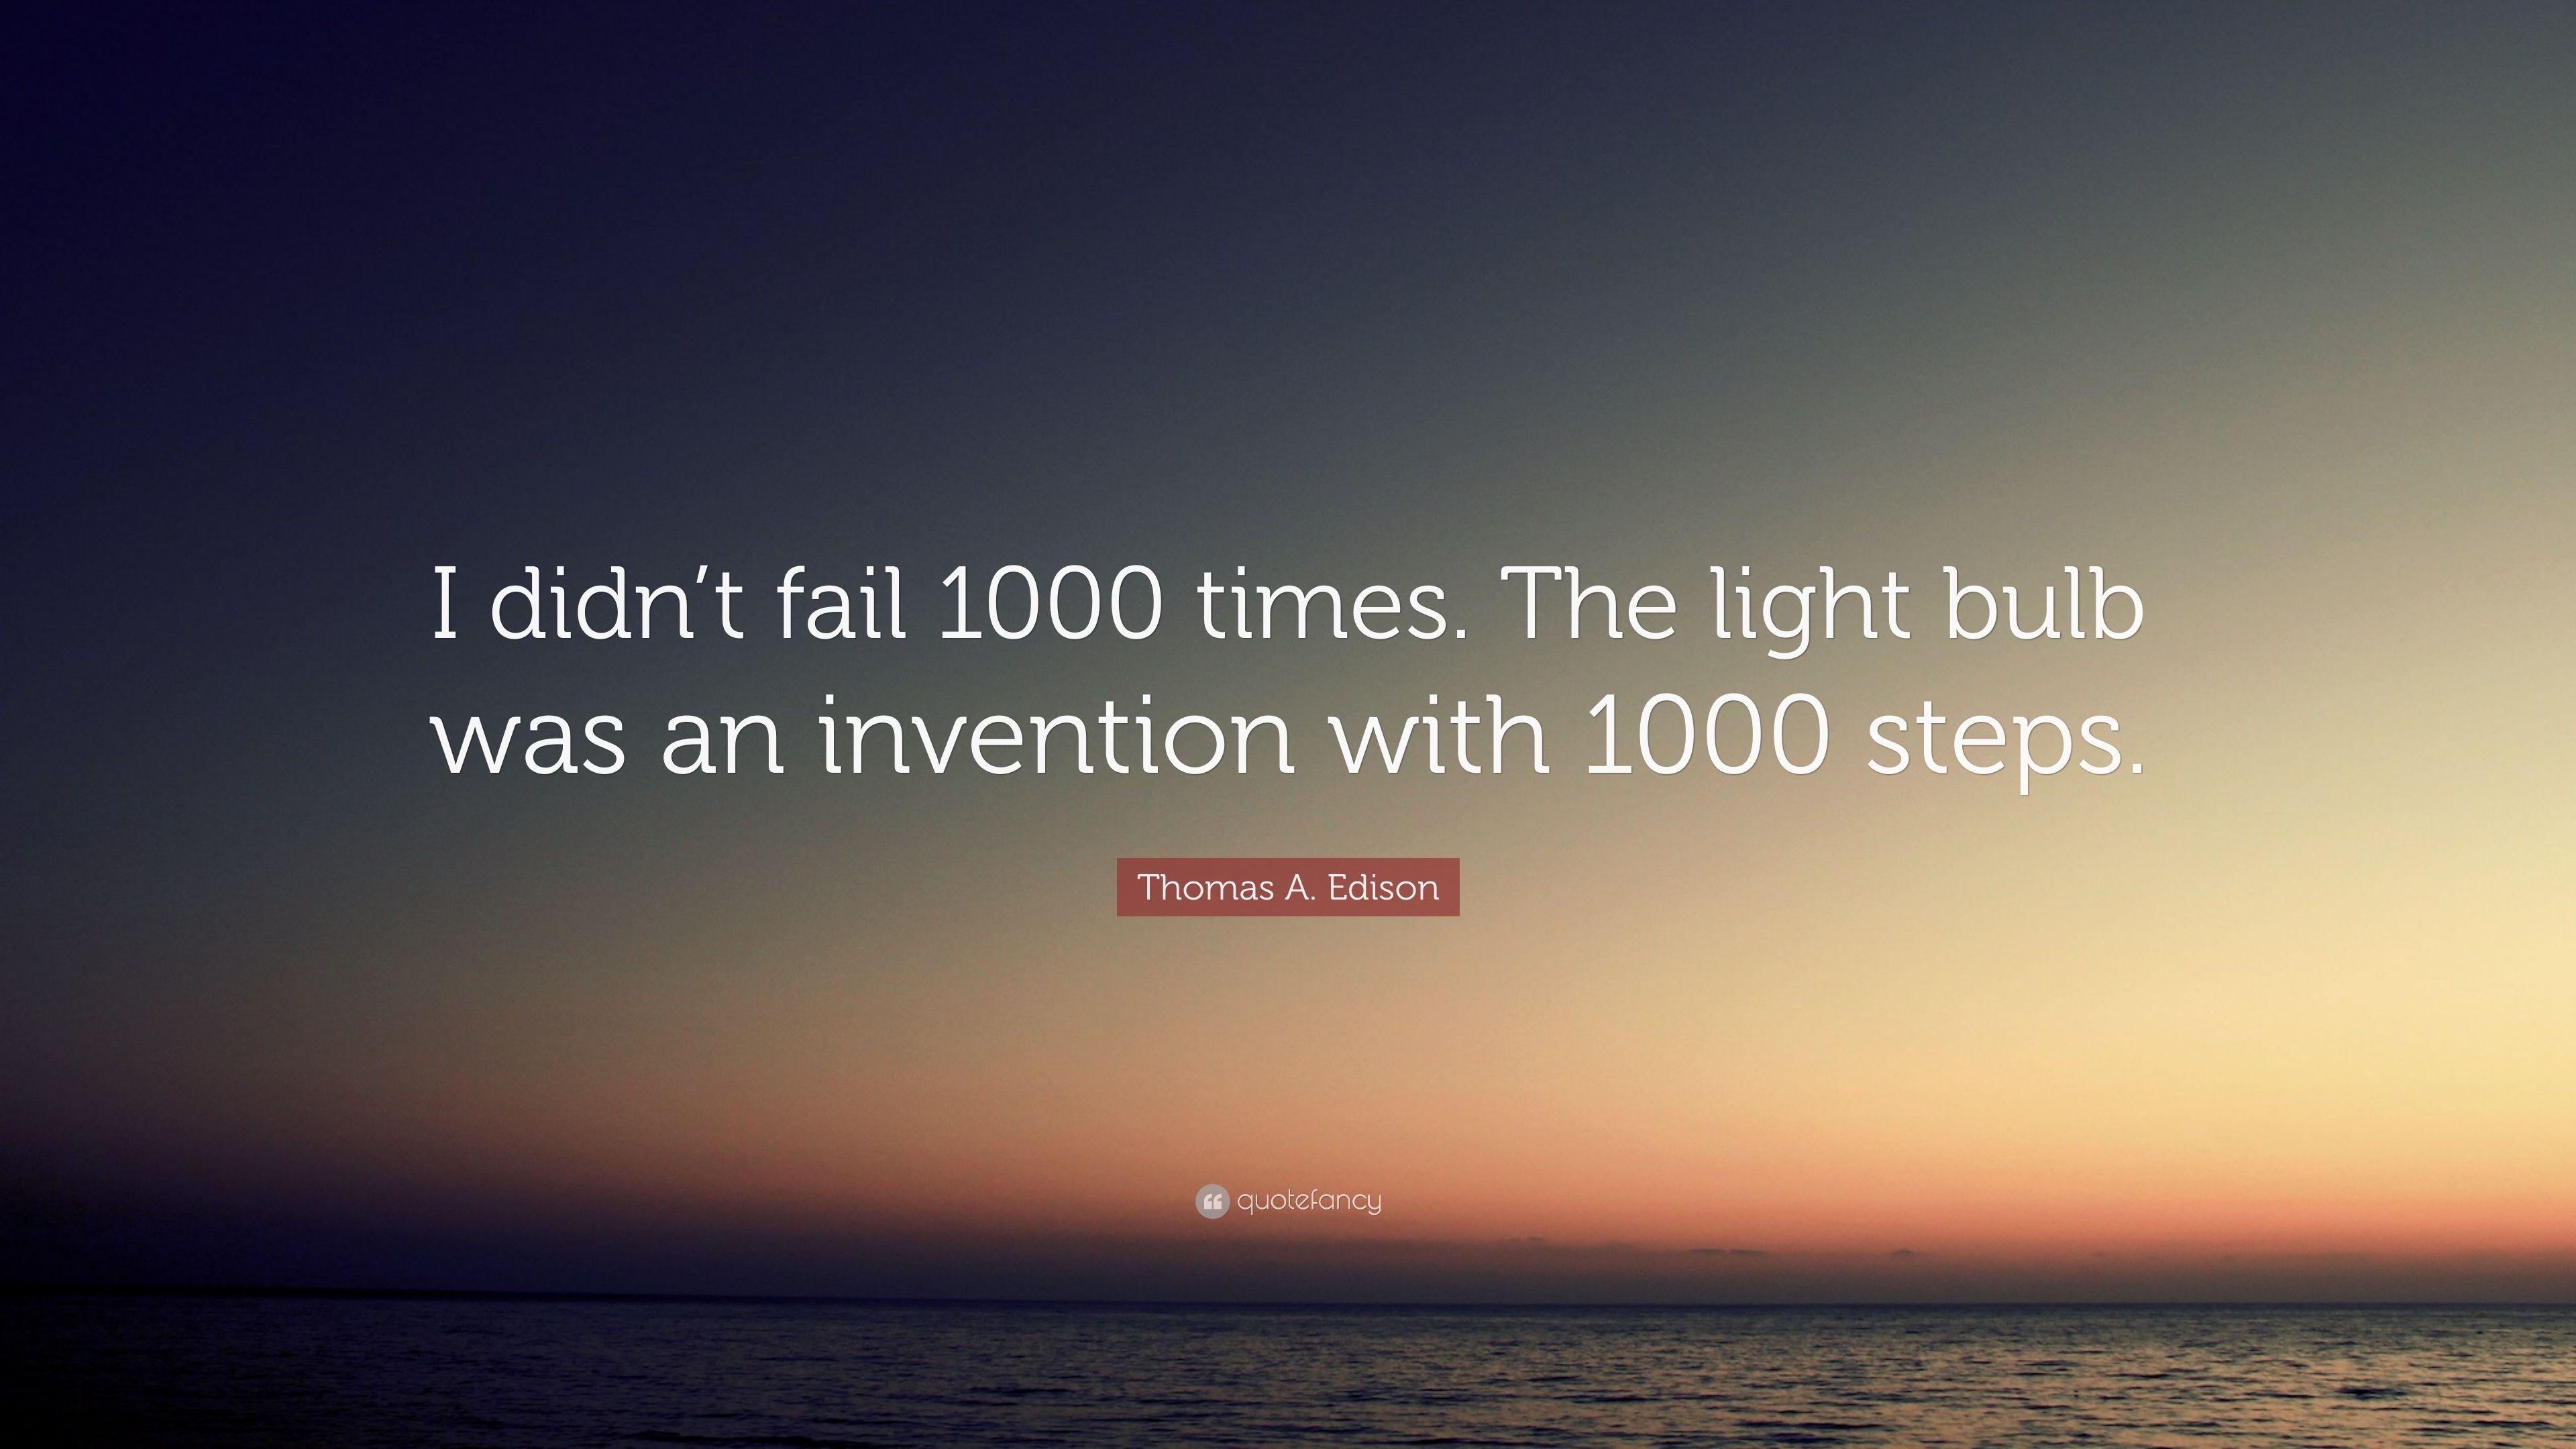 Thomas A. Edison Quote: “I didn't fail 1000 times. The light bulb